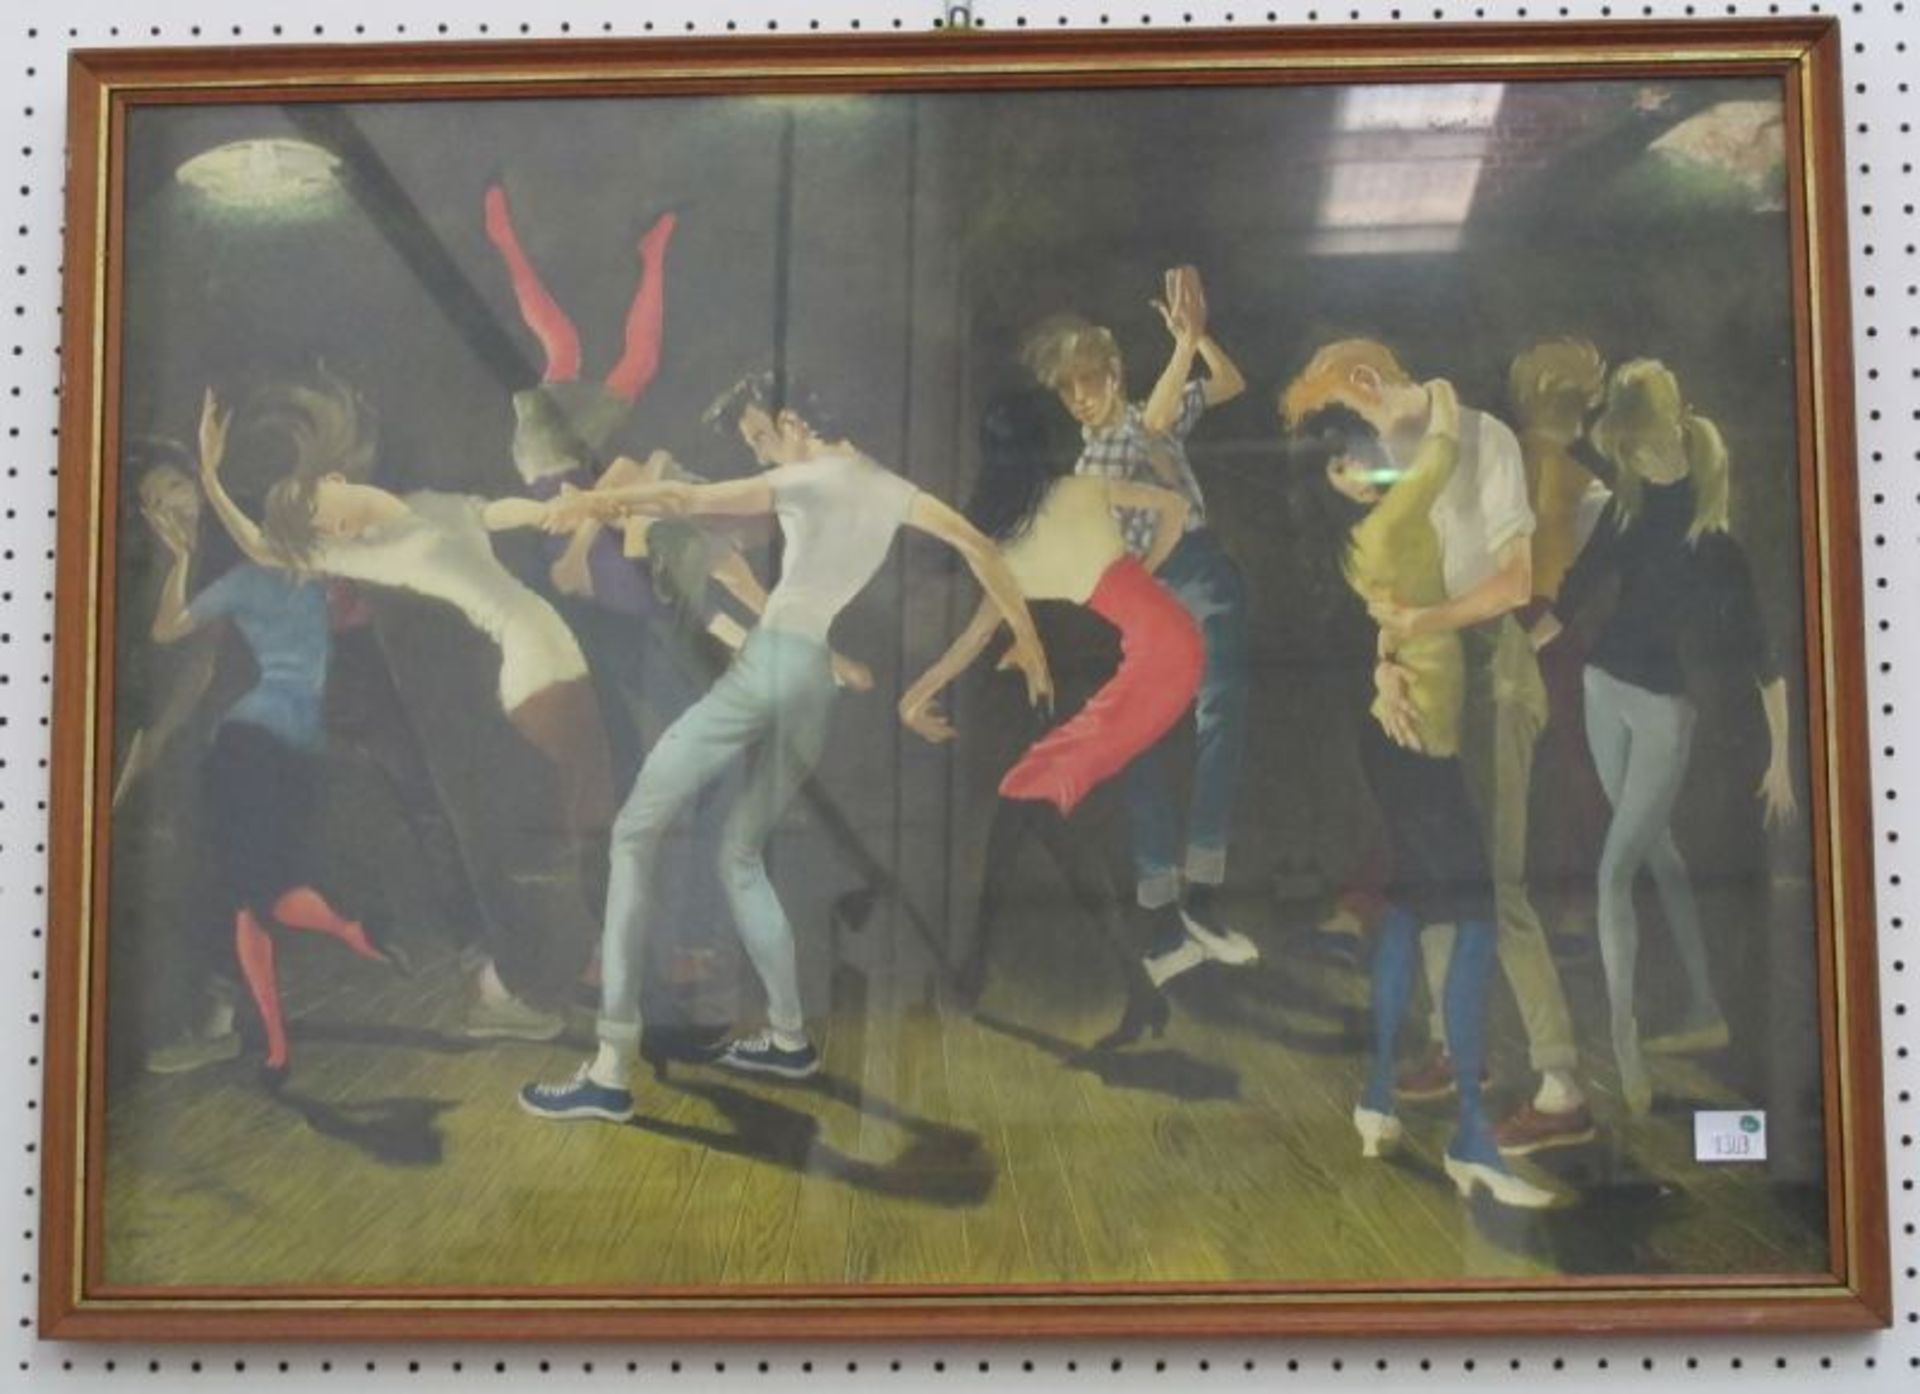 An Energetic Framed Print of Dancing Couples by Doris Zinkersen.  53cm x 75cm.  (Est. £20-£40)